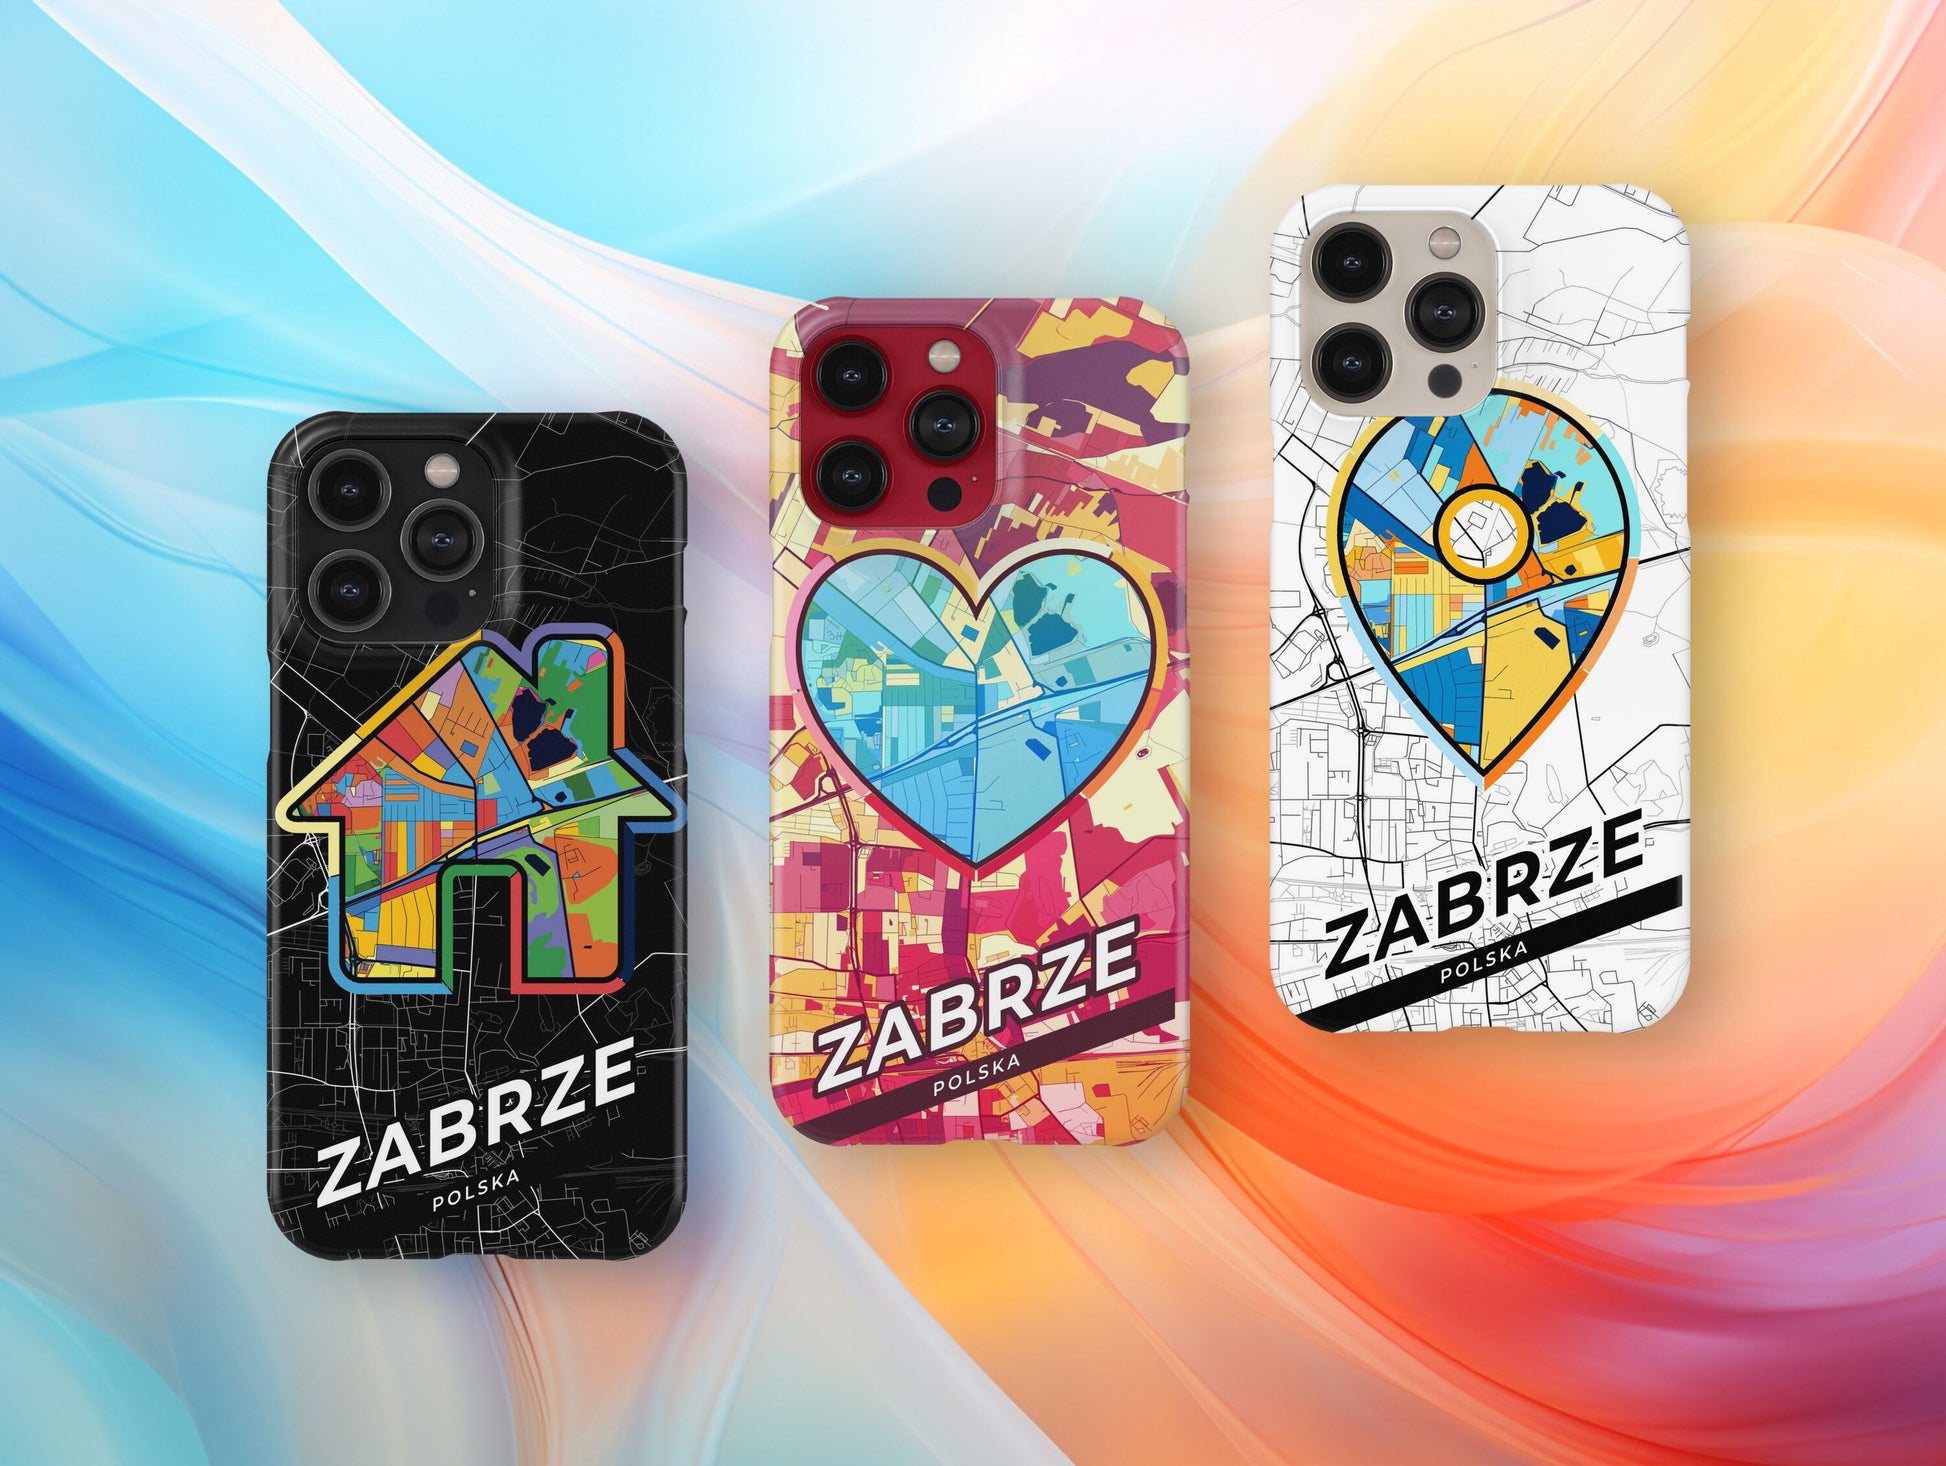 Zabrze Poland slim phone case with colorful icon